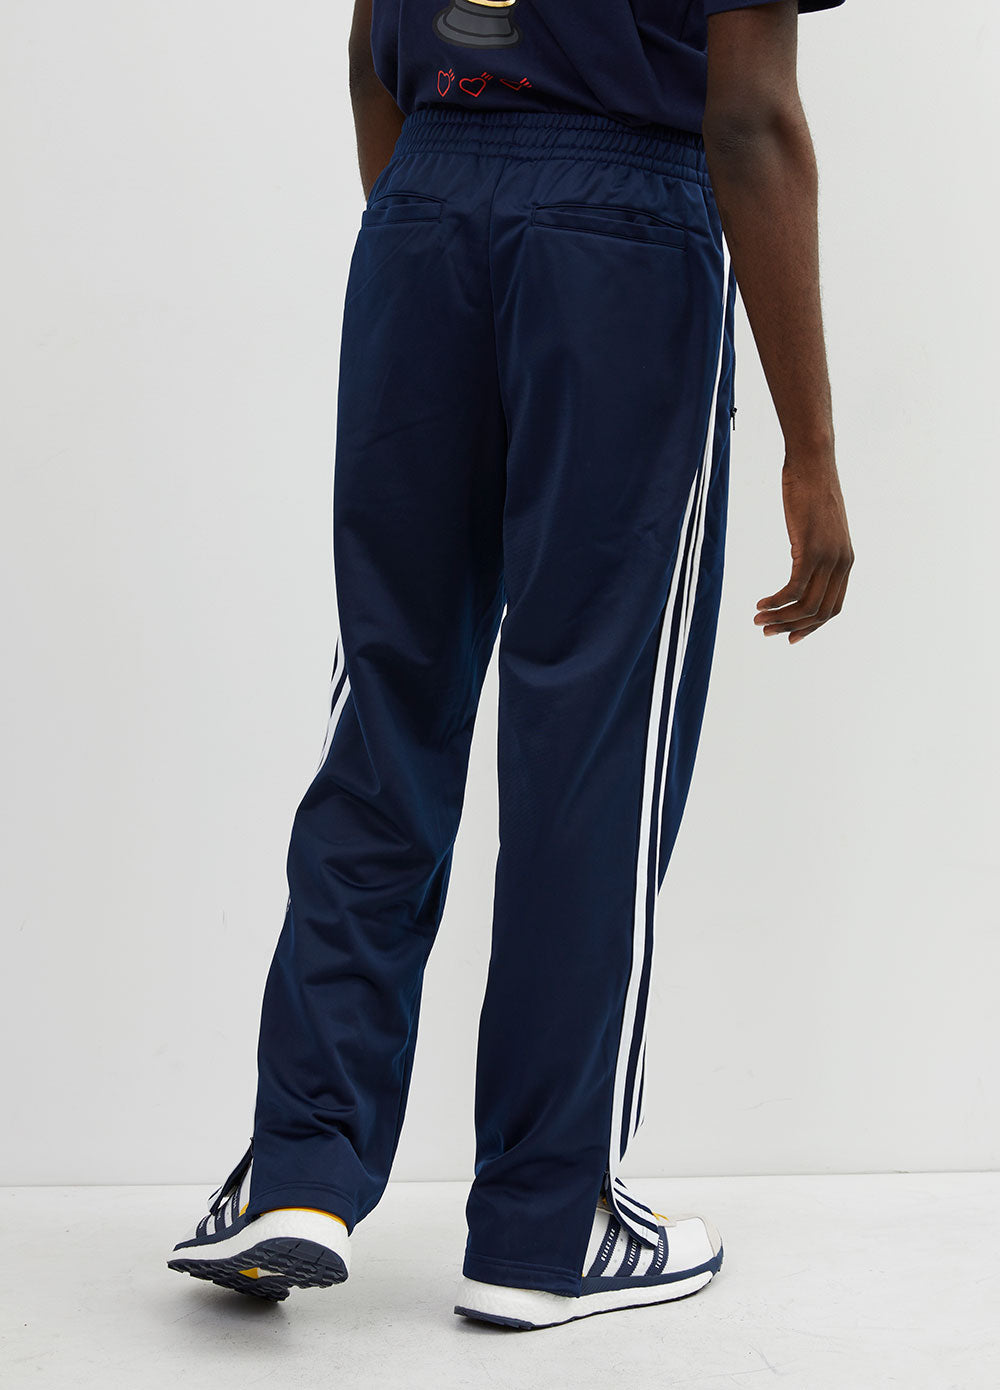 Blue adidas Originals Adicolor Classics Firebird Track Pants | Langcom? |  Backpack adidas Daily Bp II HD9902 Shared Wonwh Black